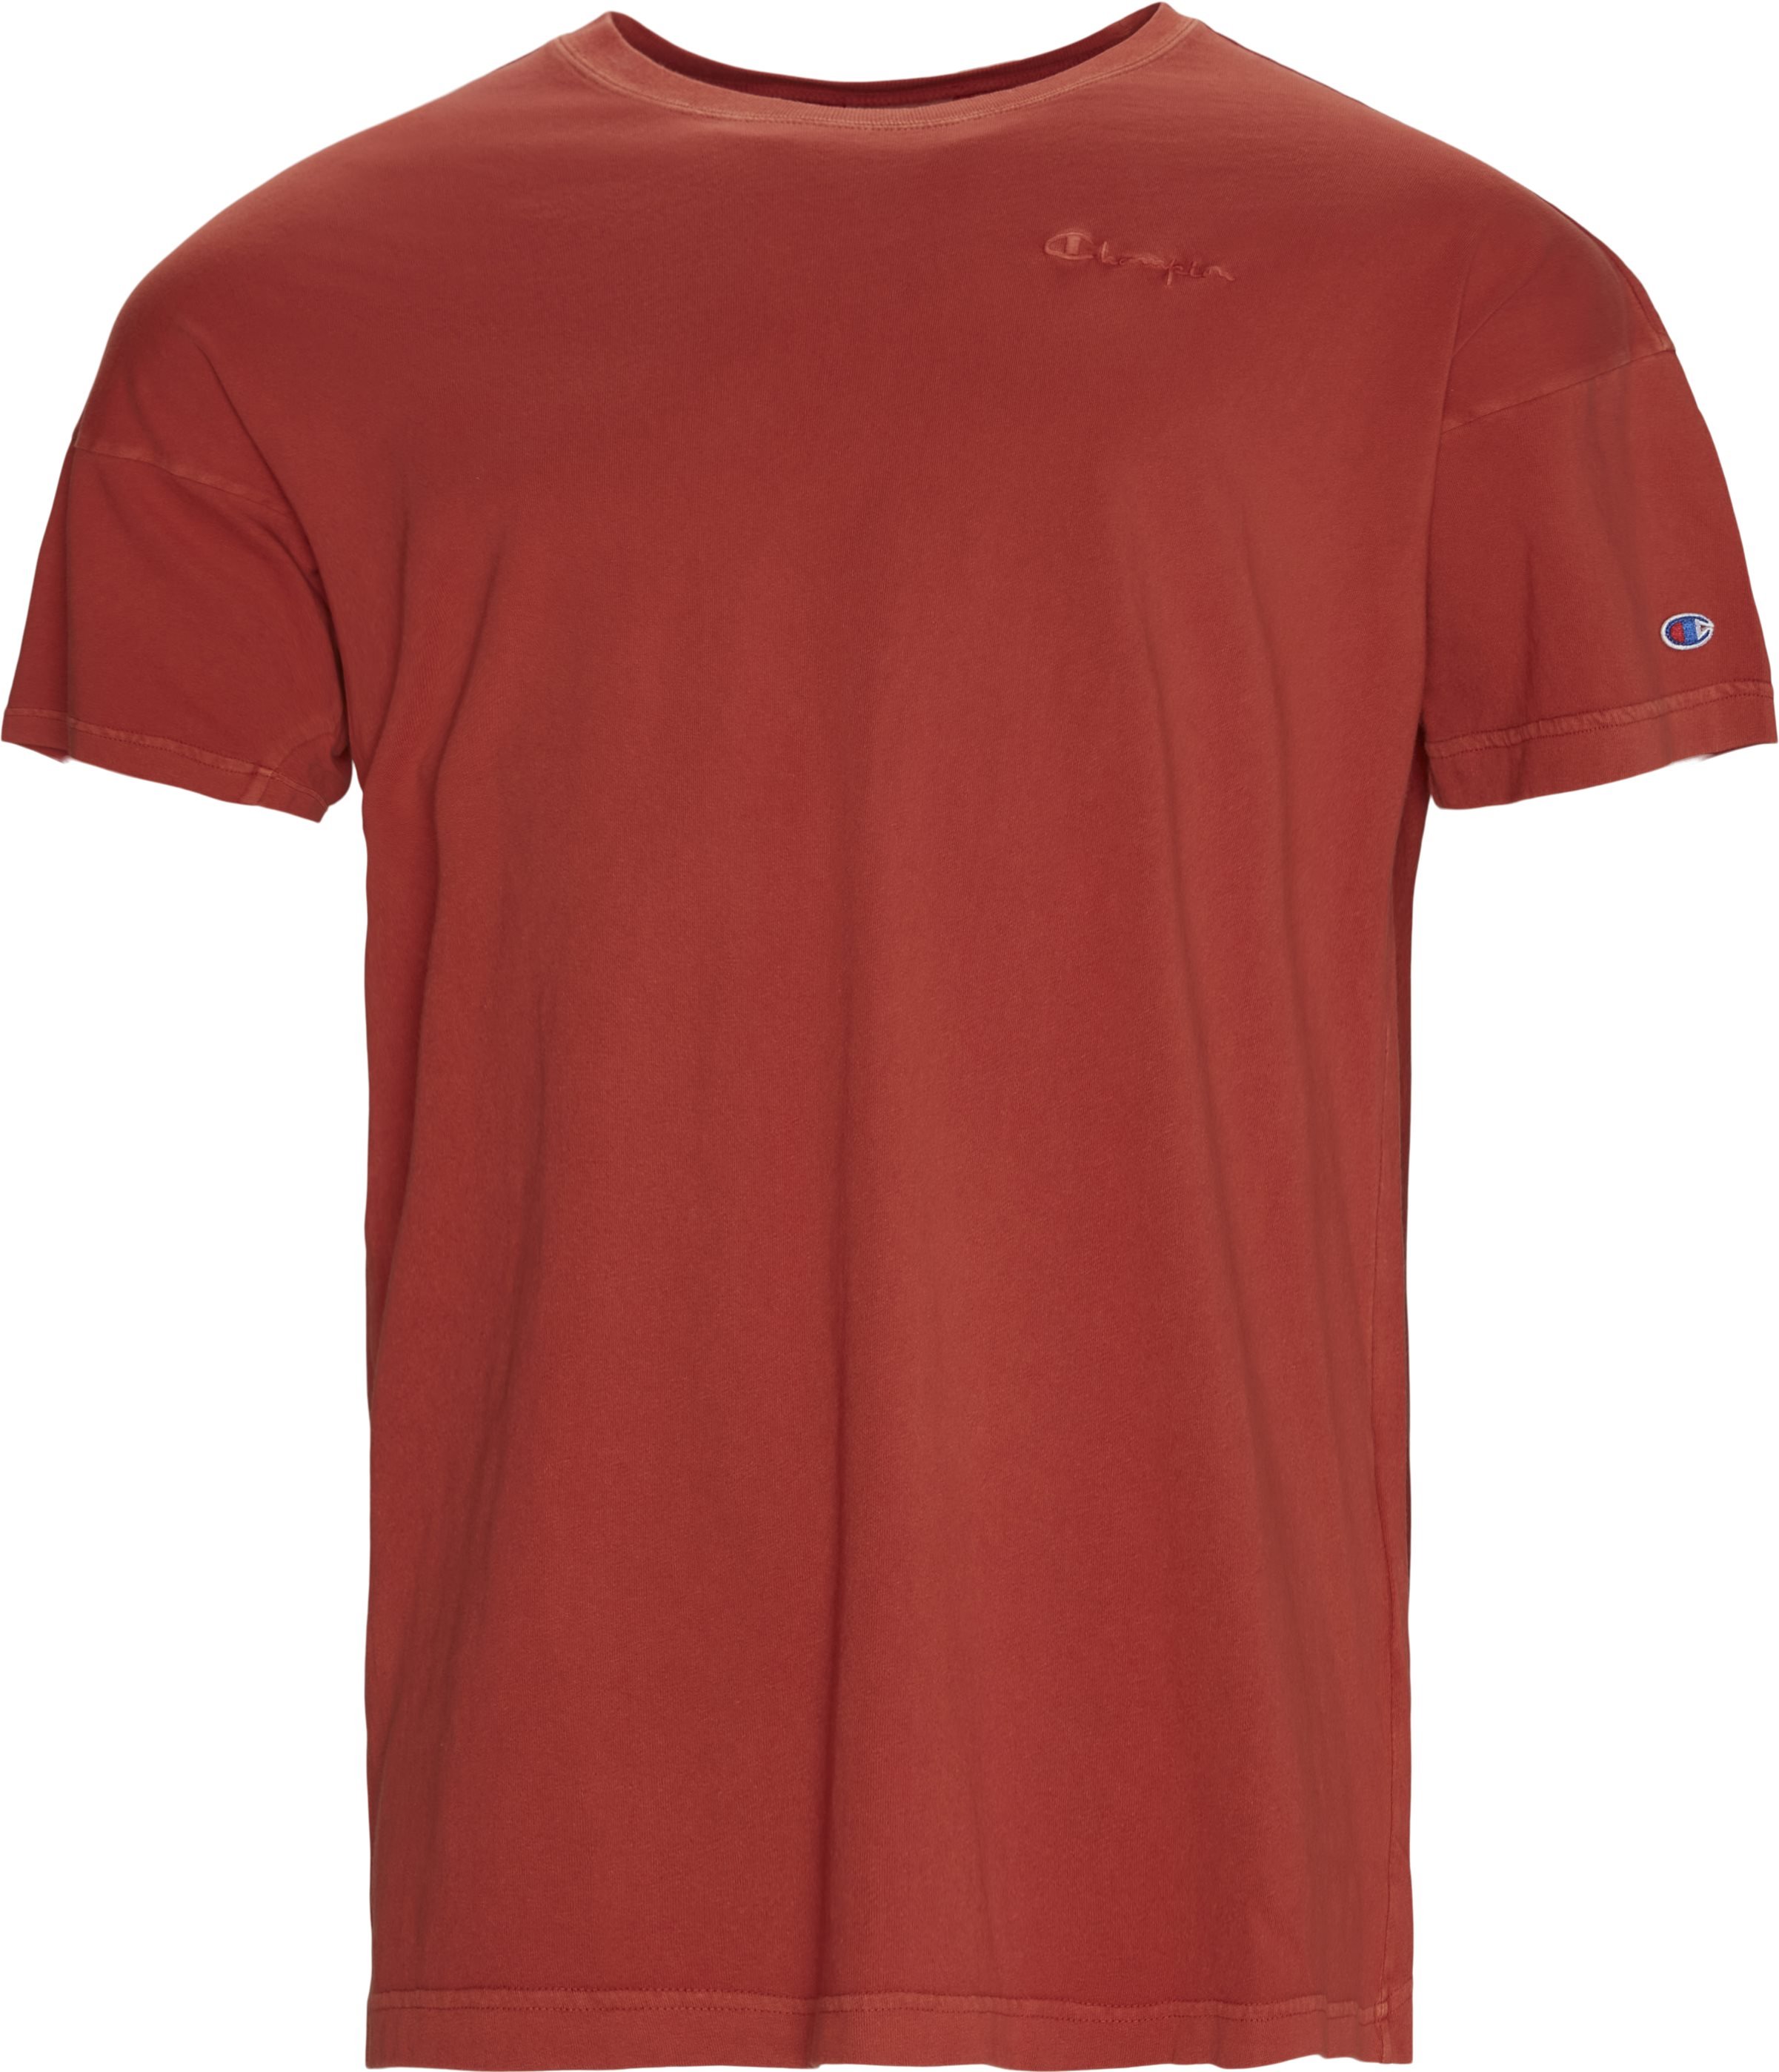 GD Tee - T-shirts - Regular fit - Röd